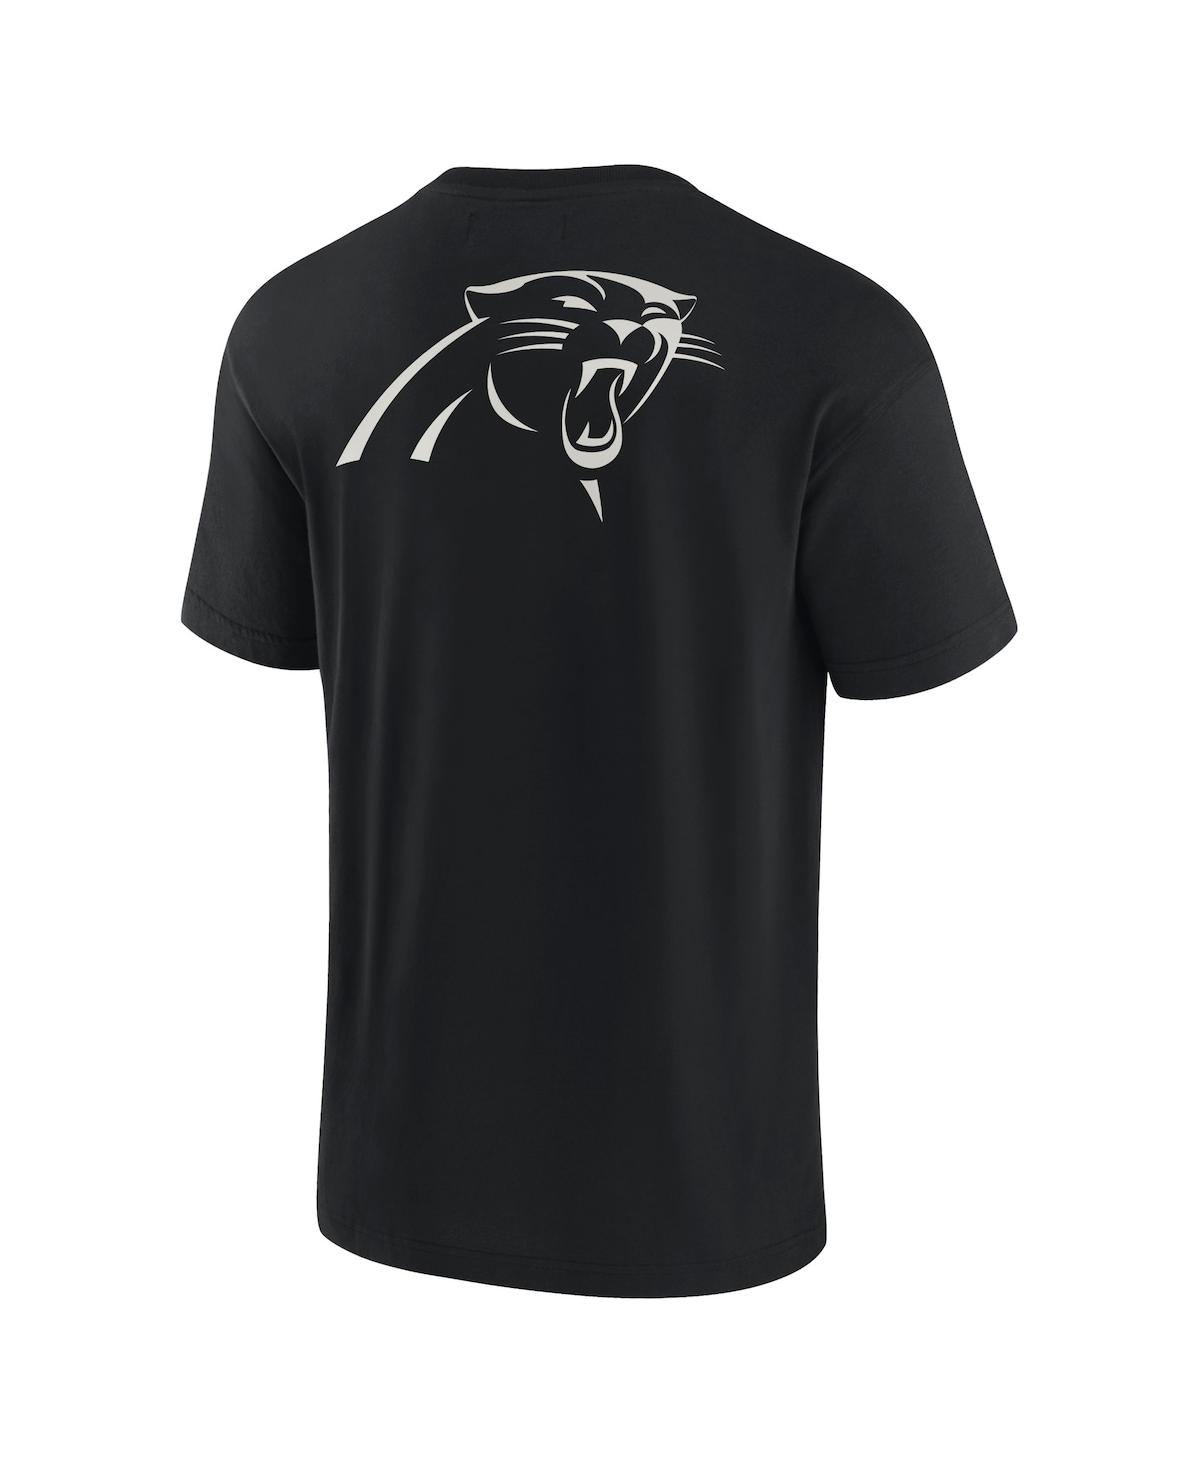 Shop Fanatics Signature Men's And Women's  Black Carolina Panthers Super Soft Short Sleeve T-shirt